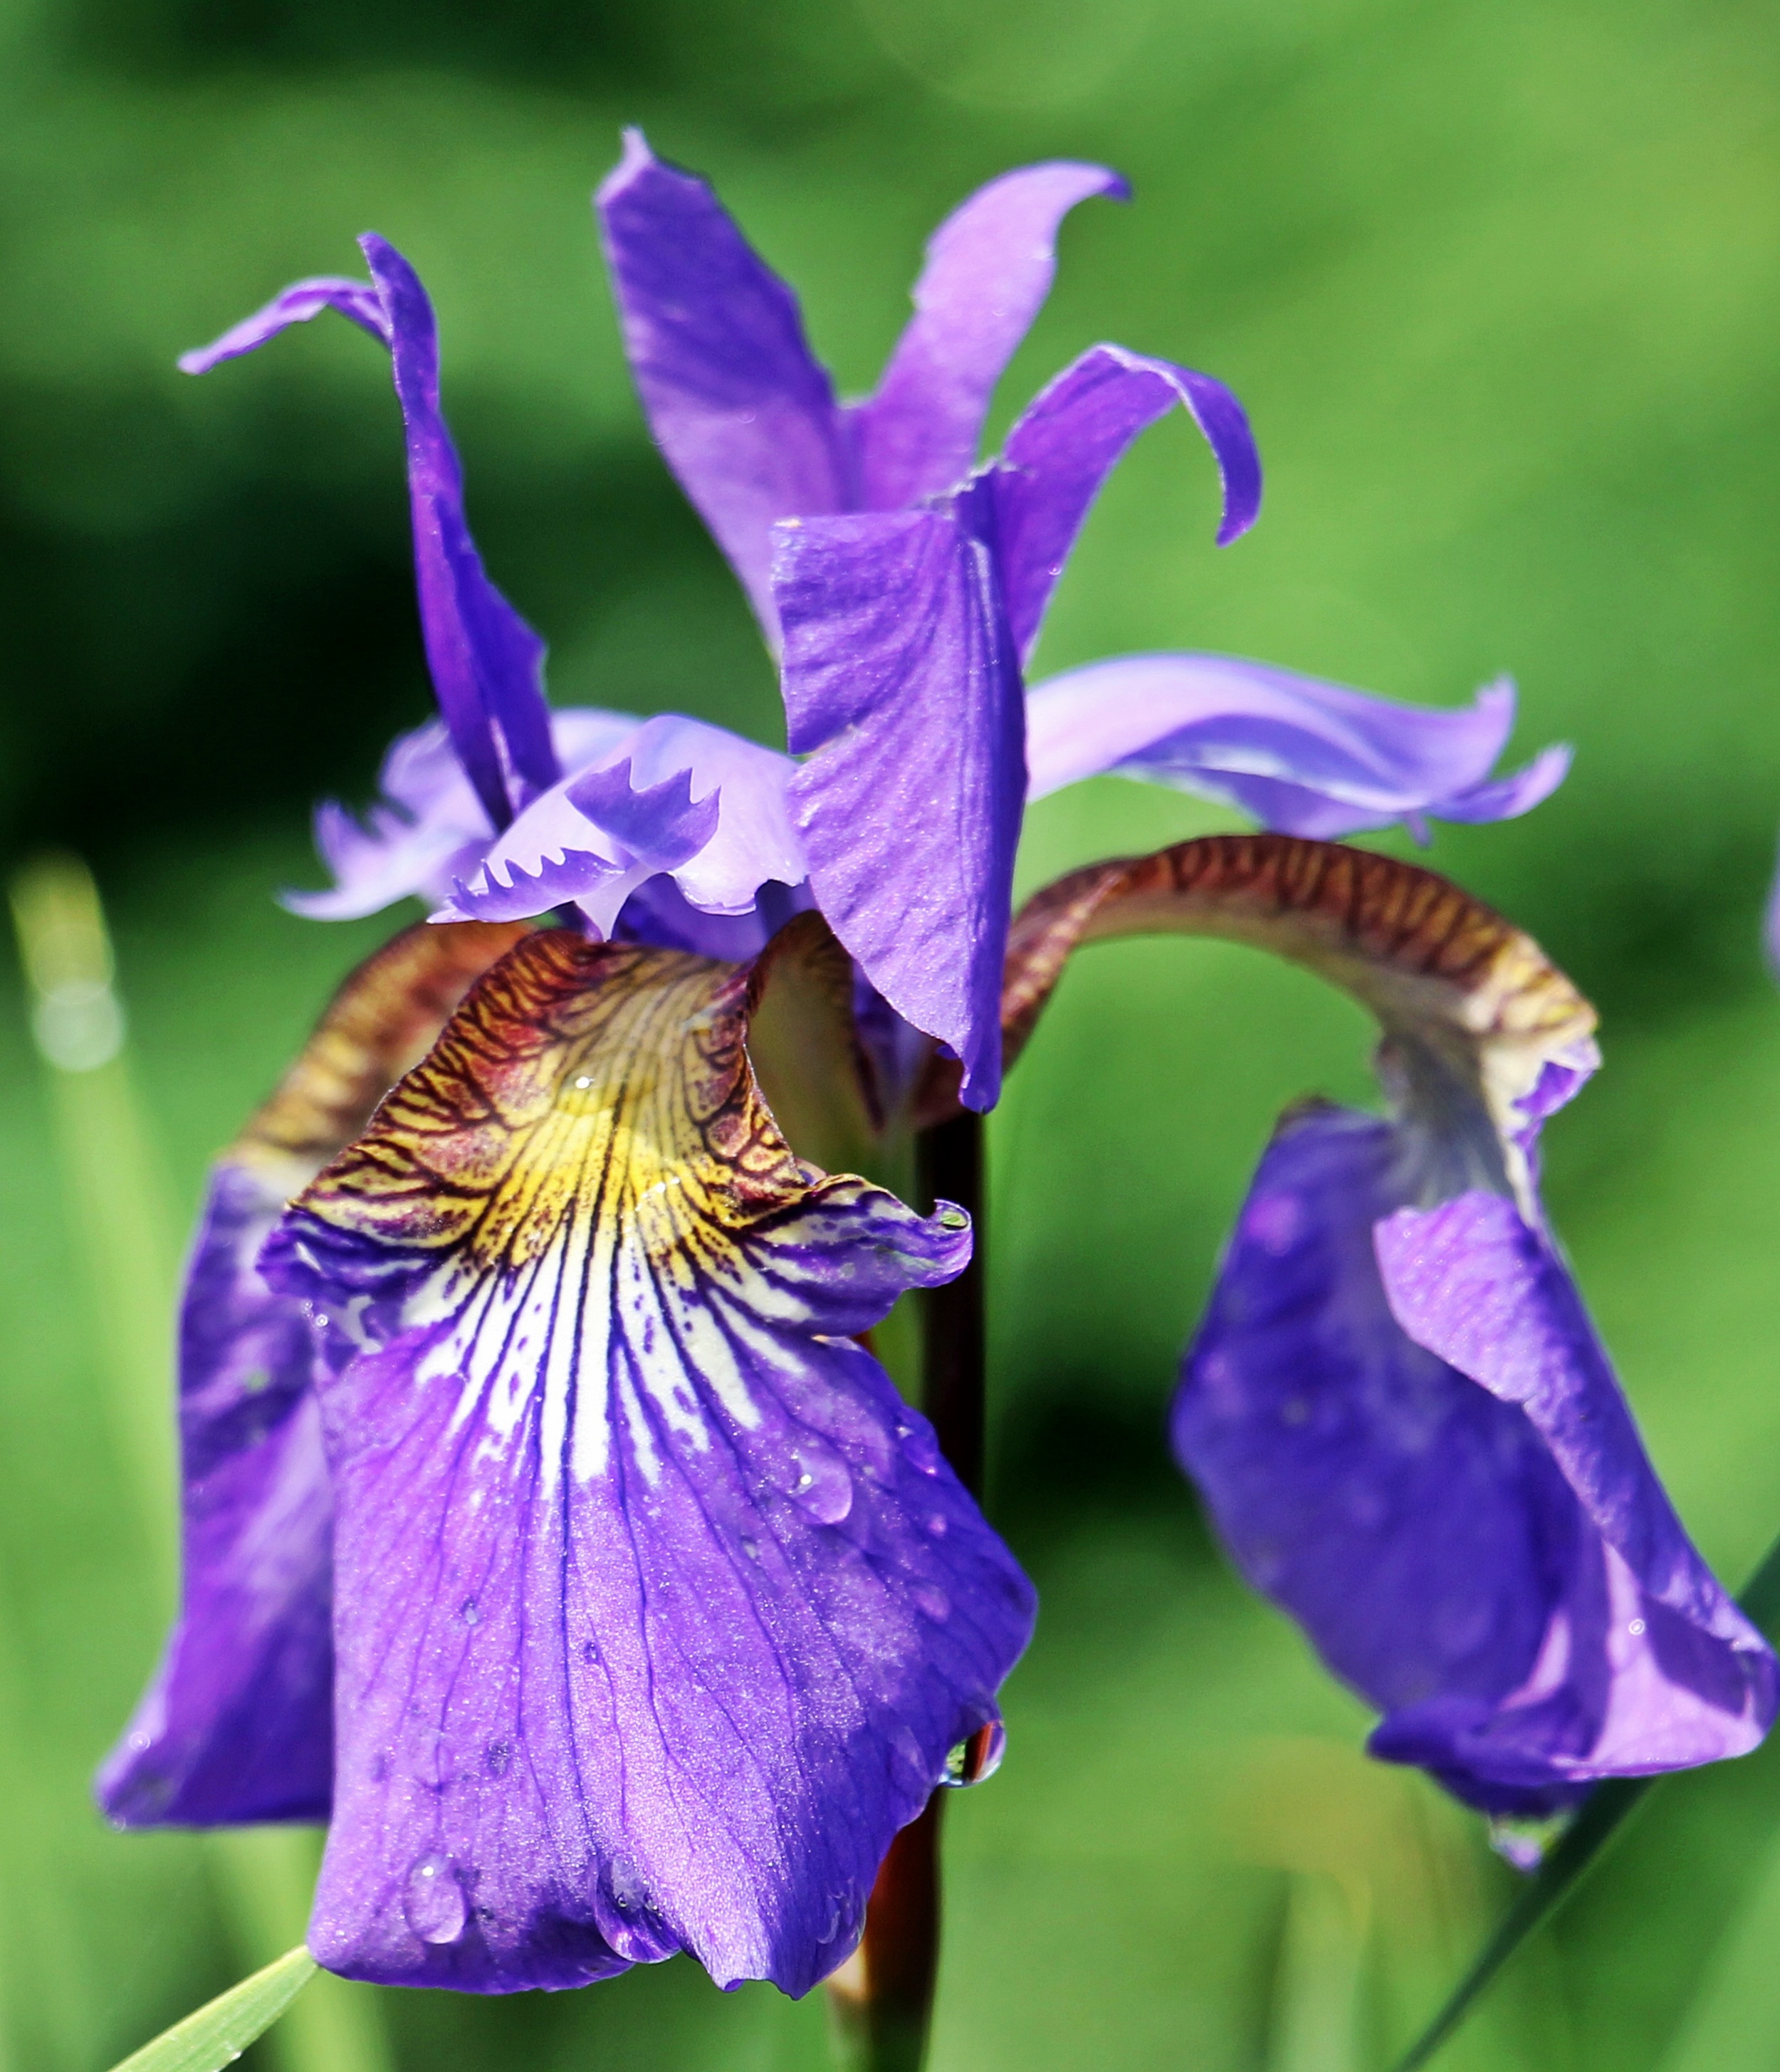 Iris in the garden photo